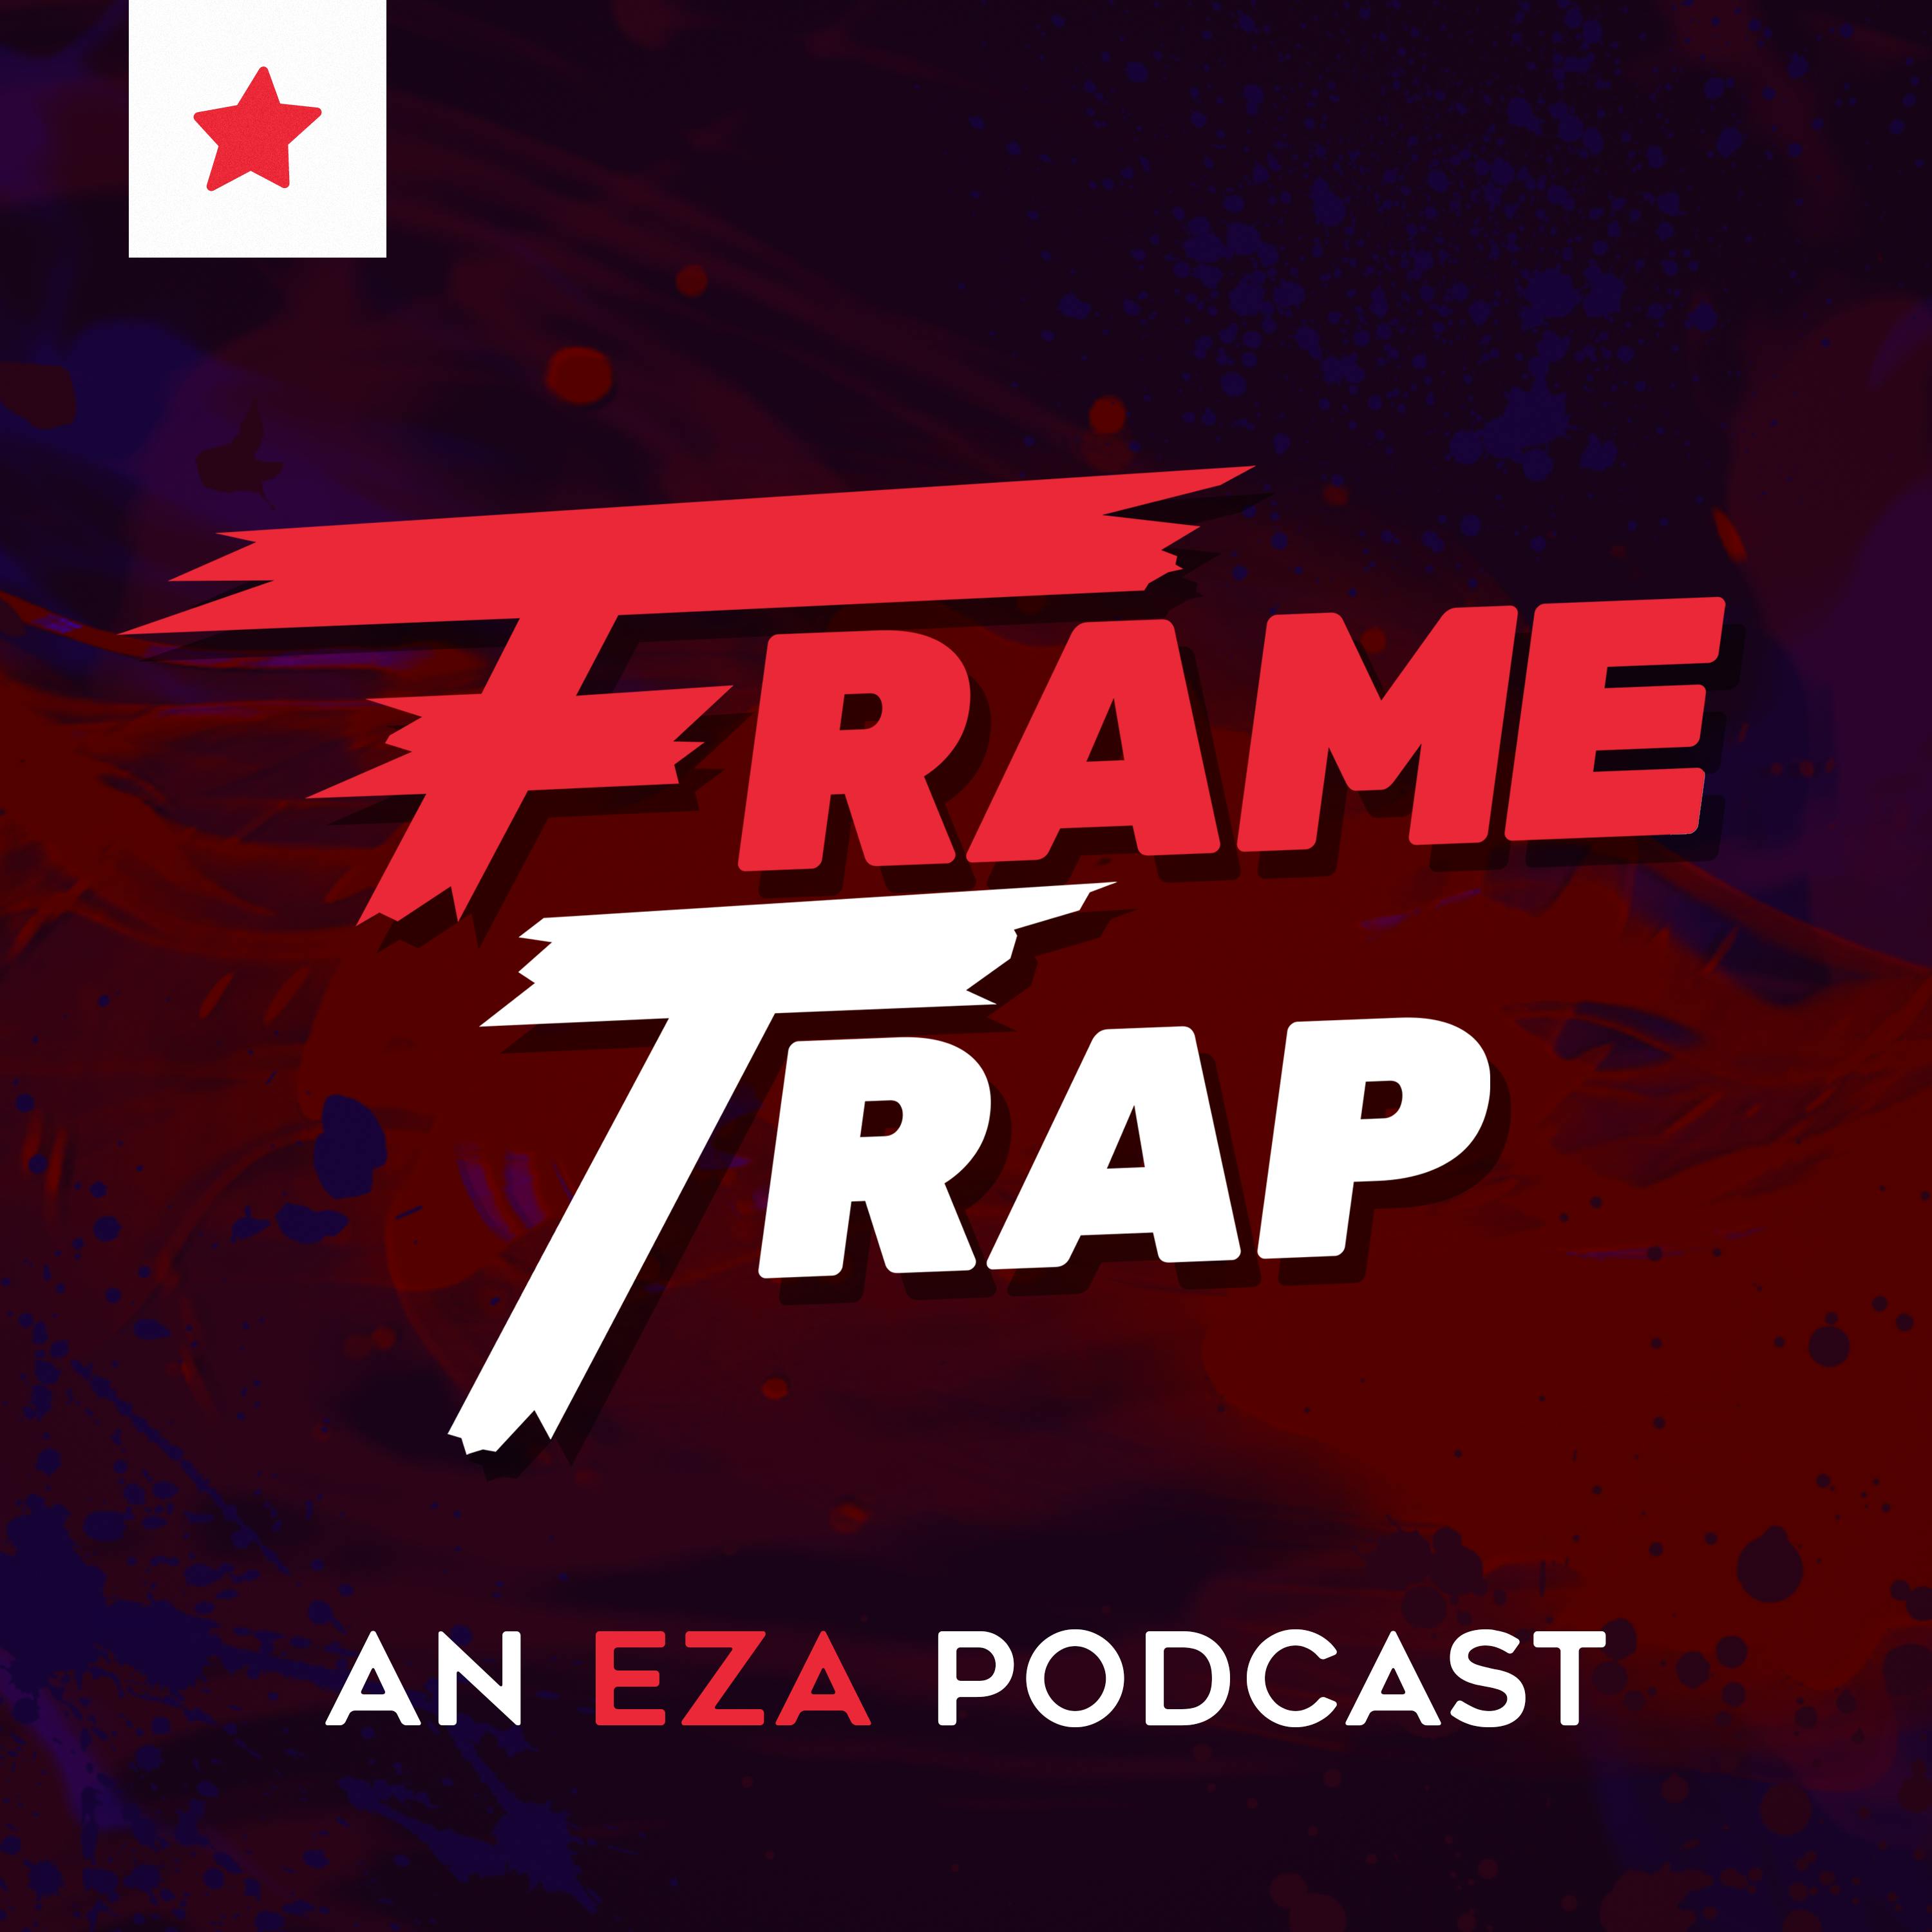 Frame Trap - Episode 193 